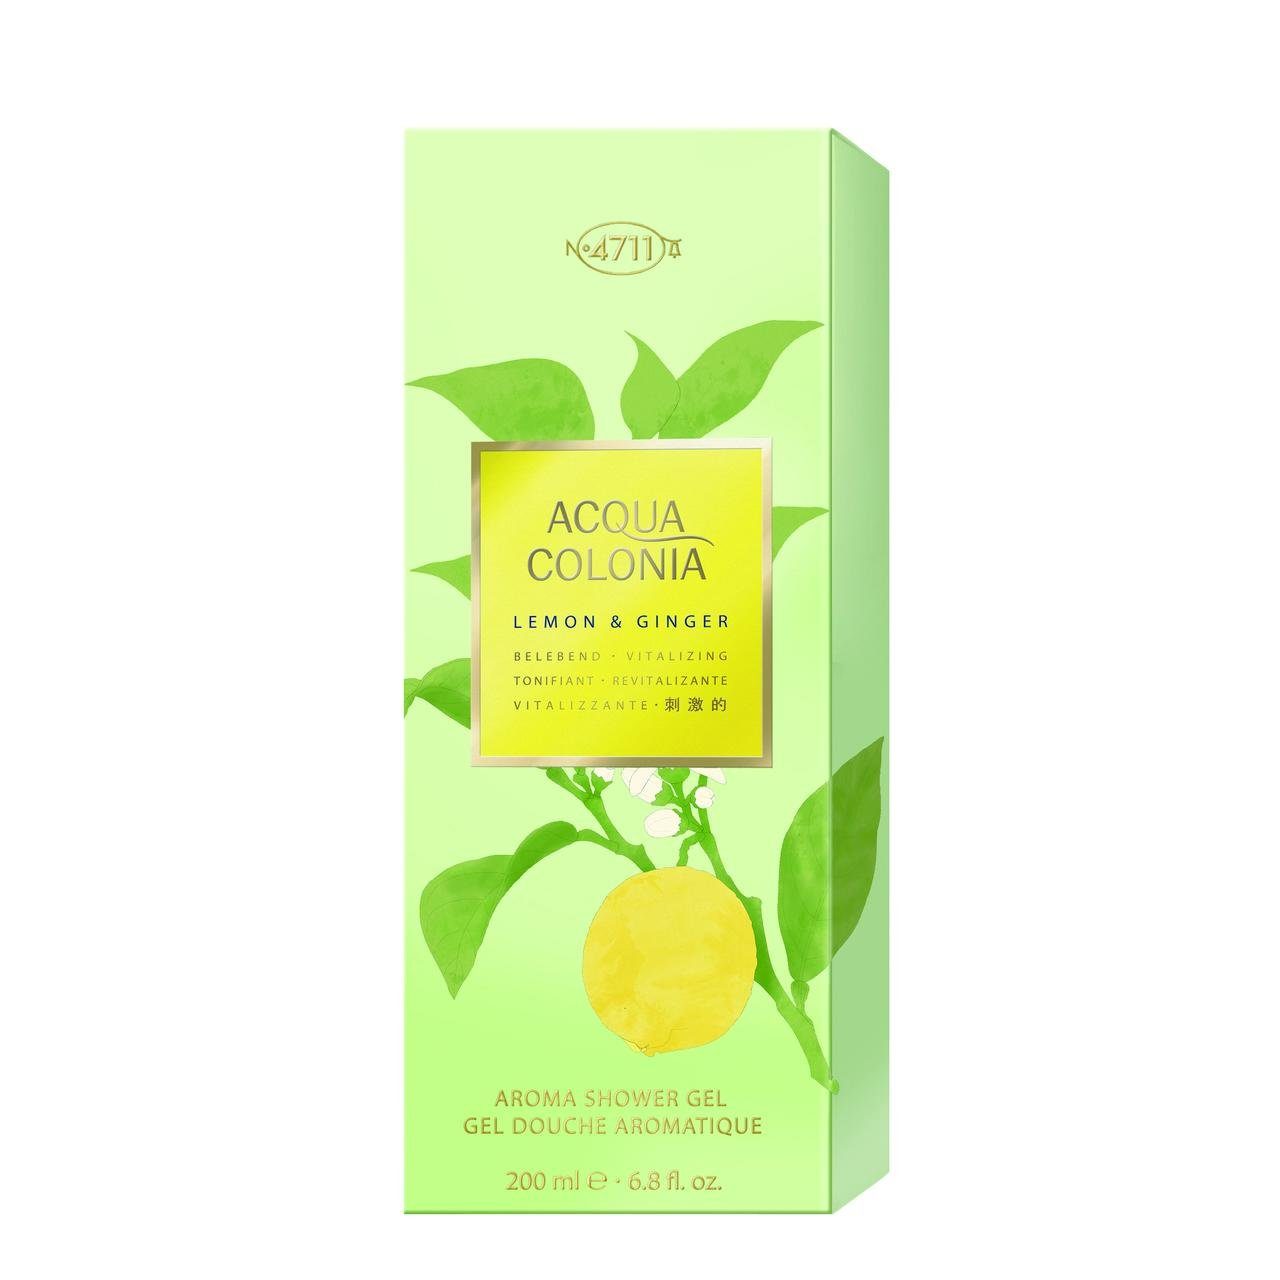 4711 Acqua Colonia Duschgel Lemon & Ginger Aroma Shower Gel with Bamboo Extract